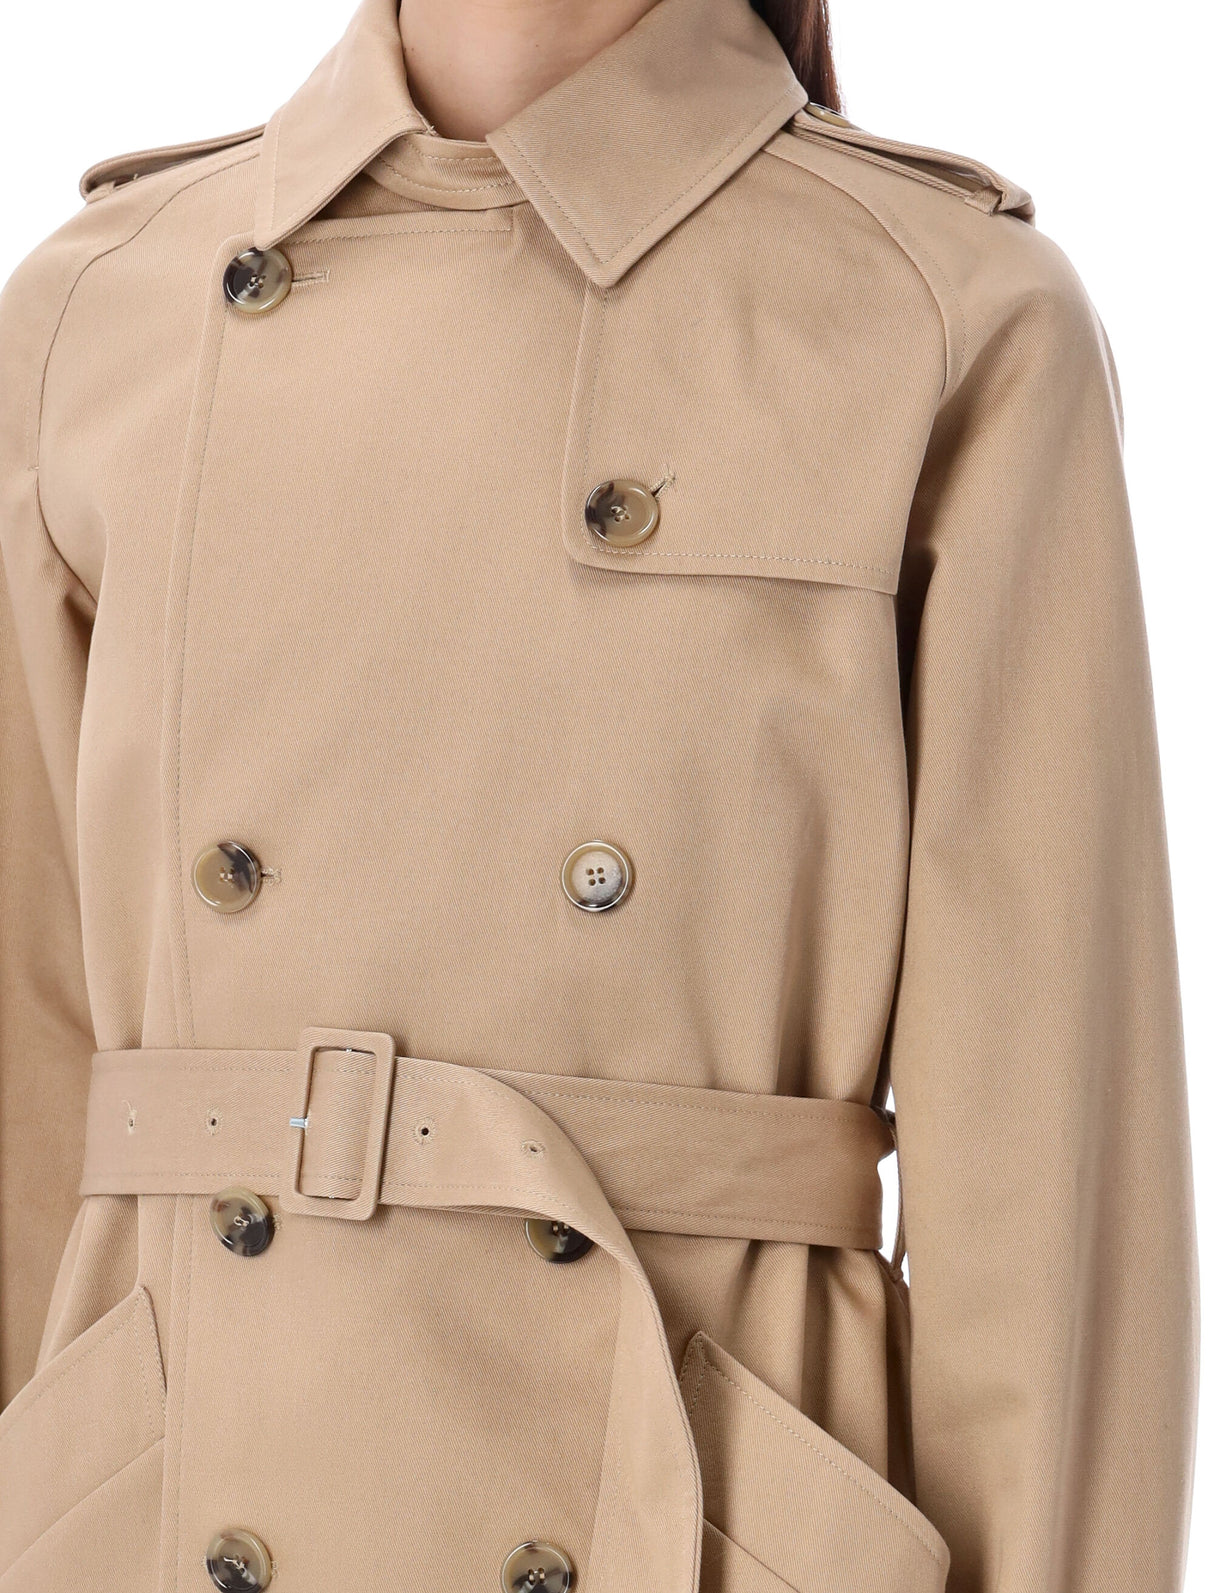 A.P.C. Waterproof Cotton Gabardine Trench Jacket for Women - Tan